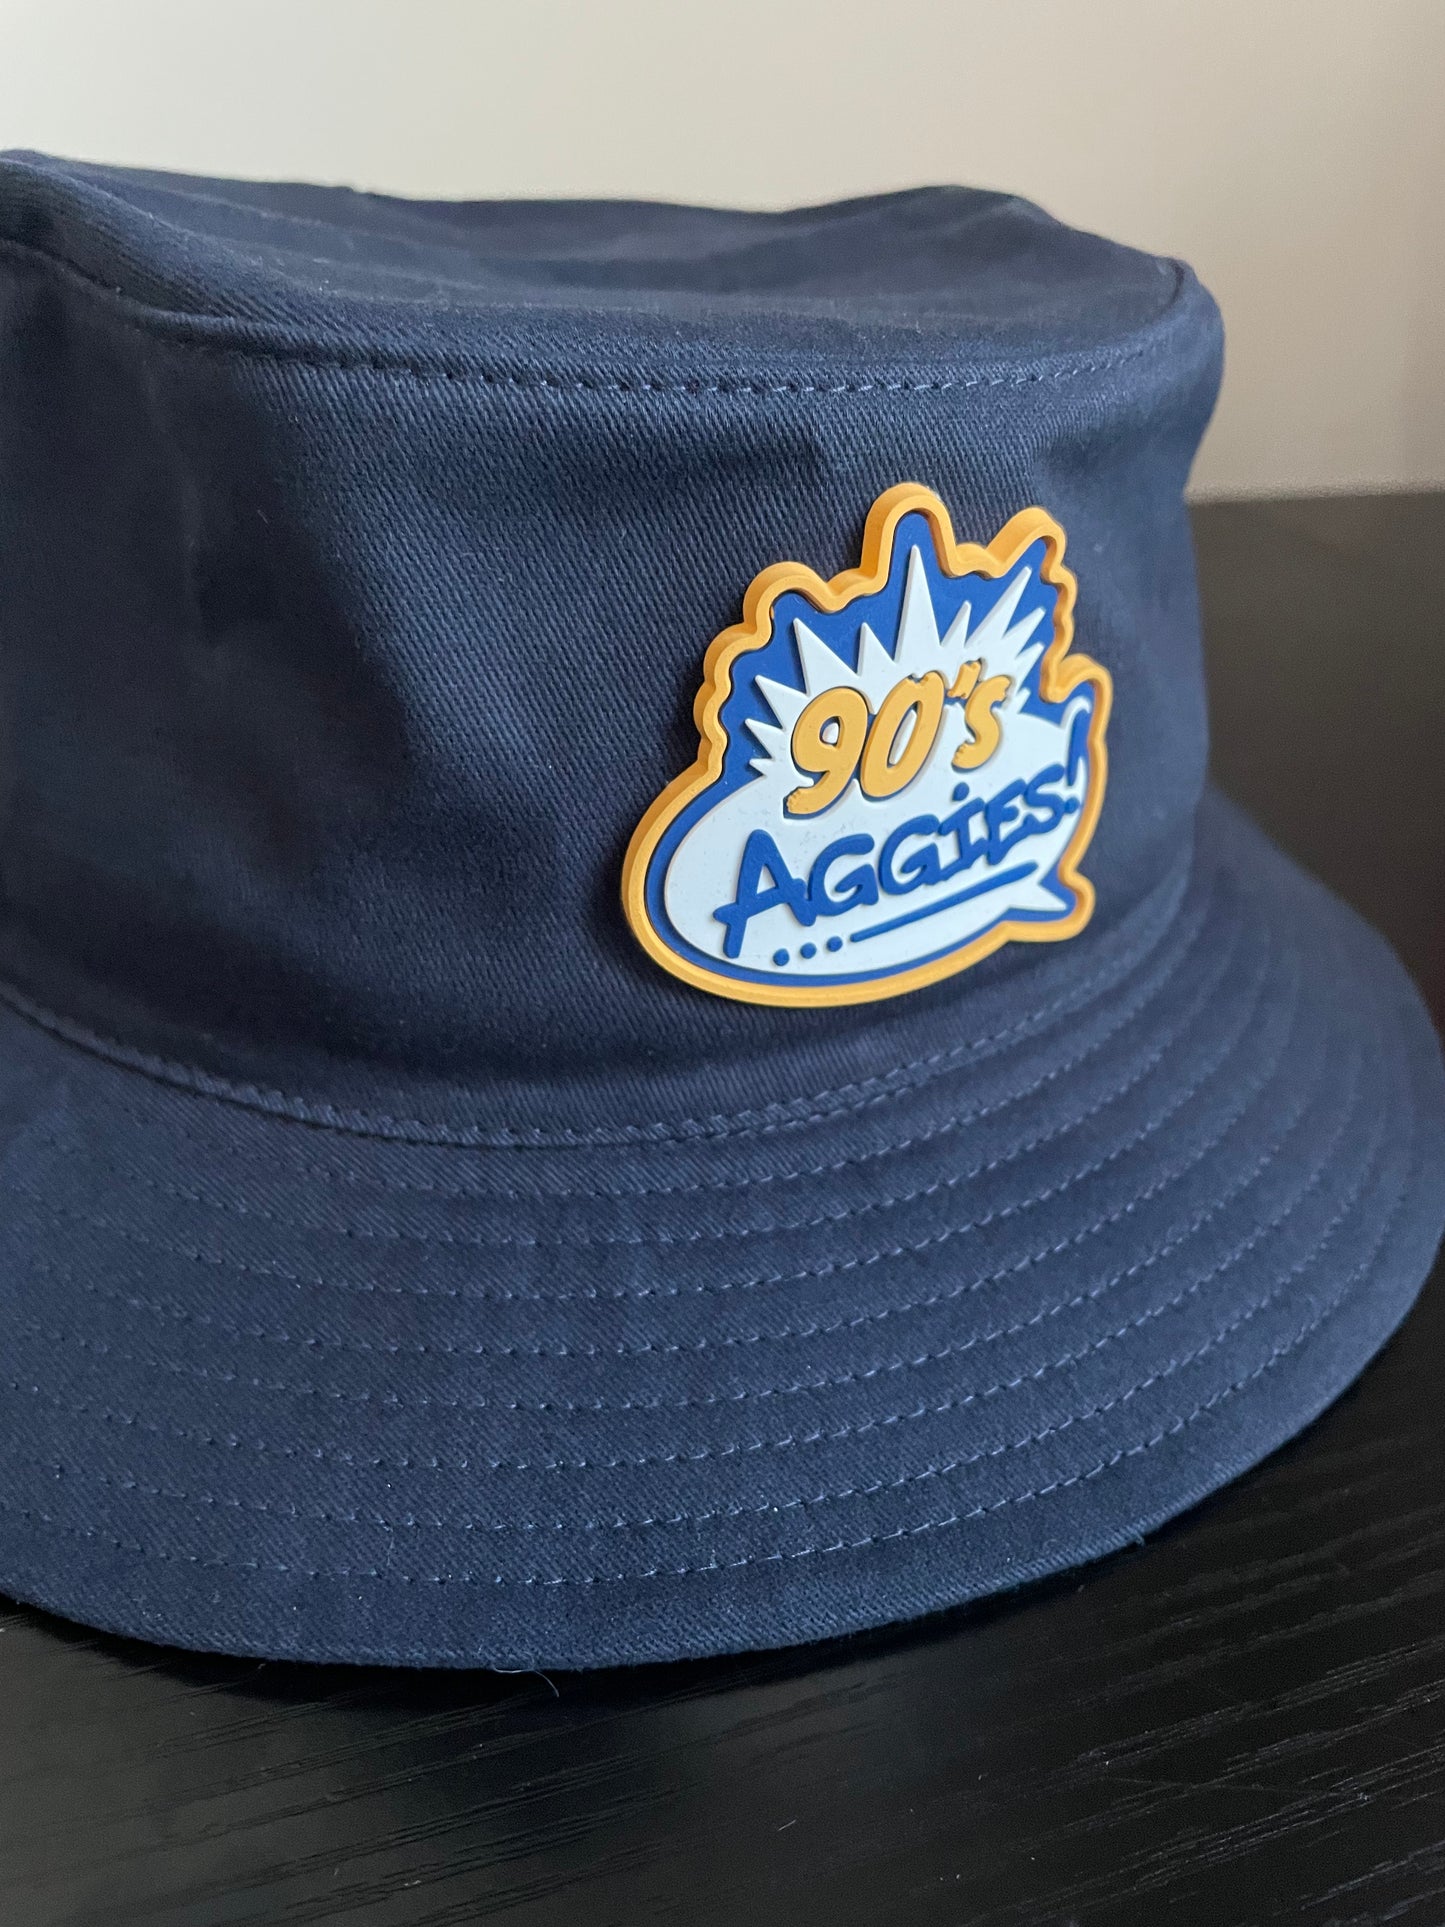 90s Aggies Bucket Hat